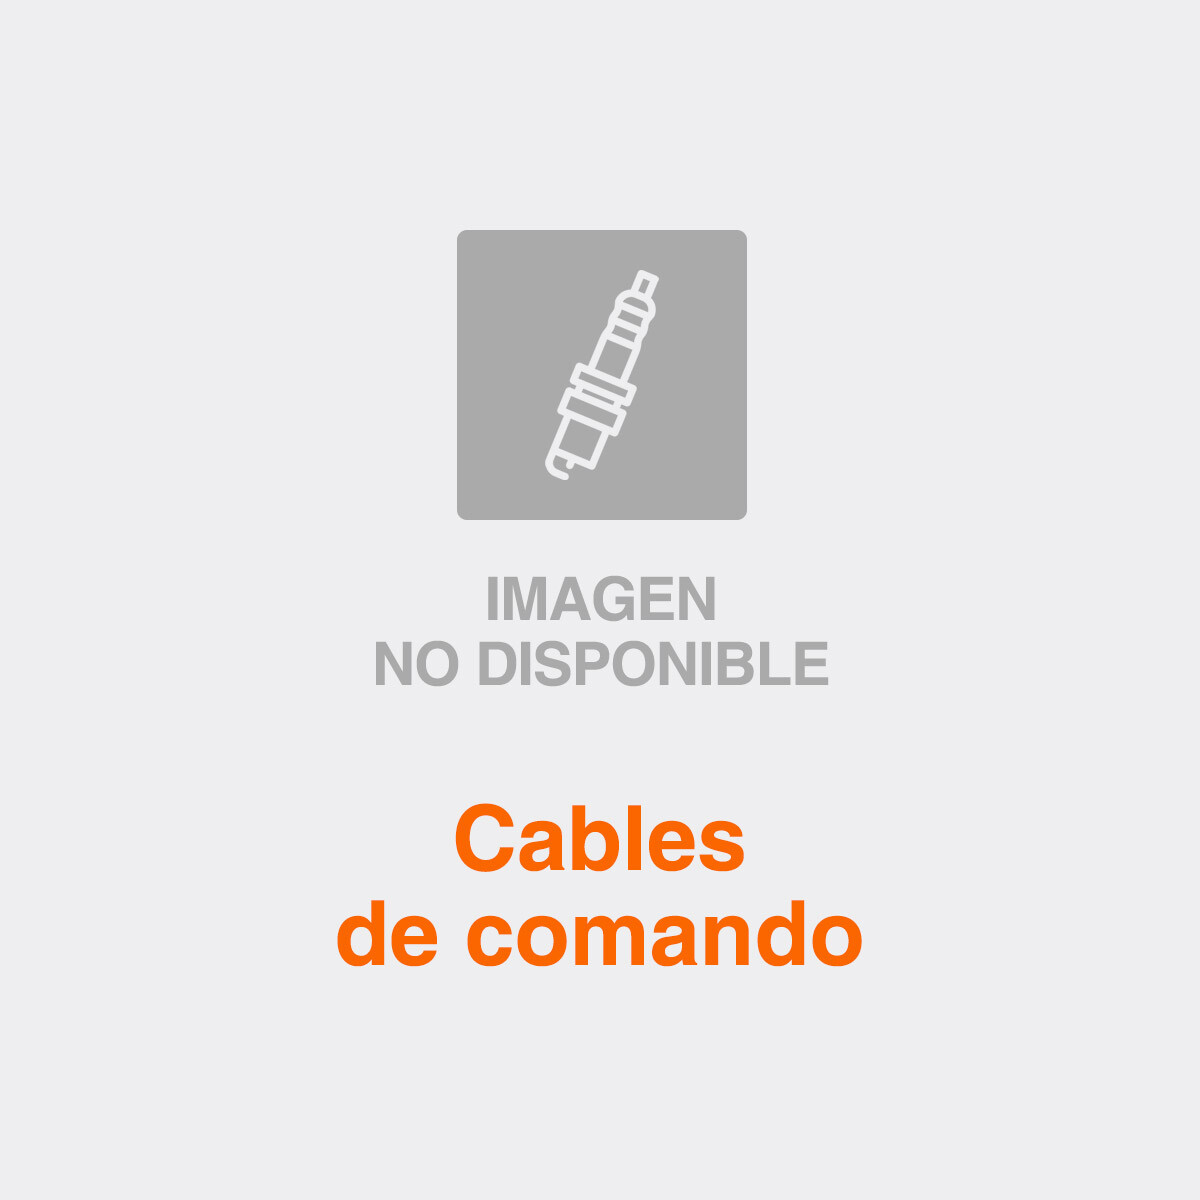 CABLE DE COMANDO GONOW SELECTOR CAMBIOS CA6380 - 